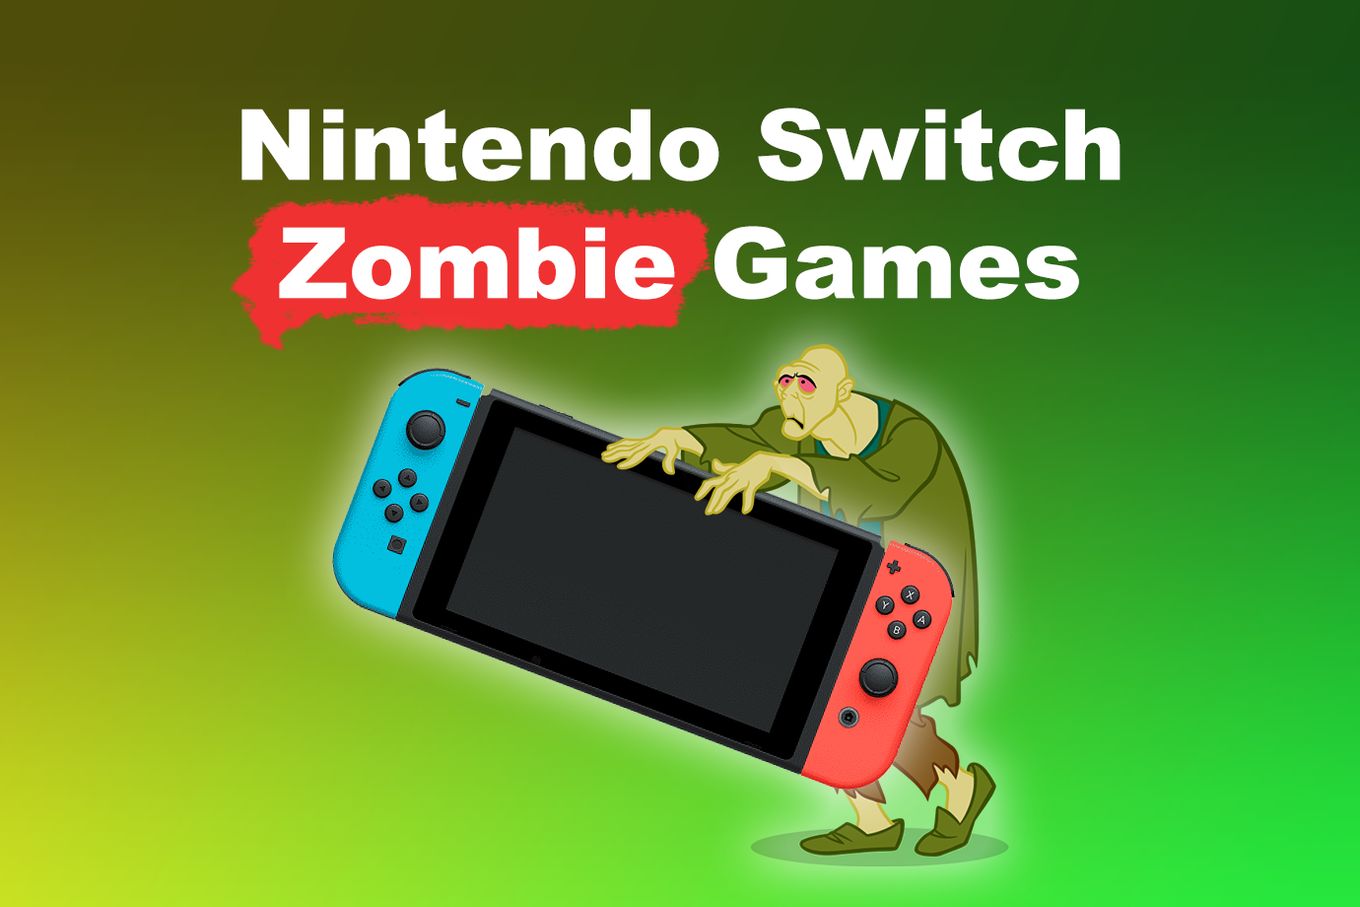 Nintendo Switch Zombie Games